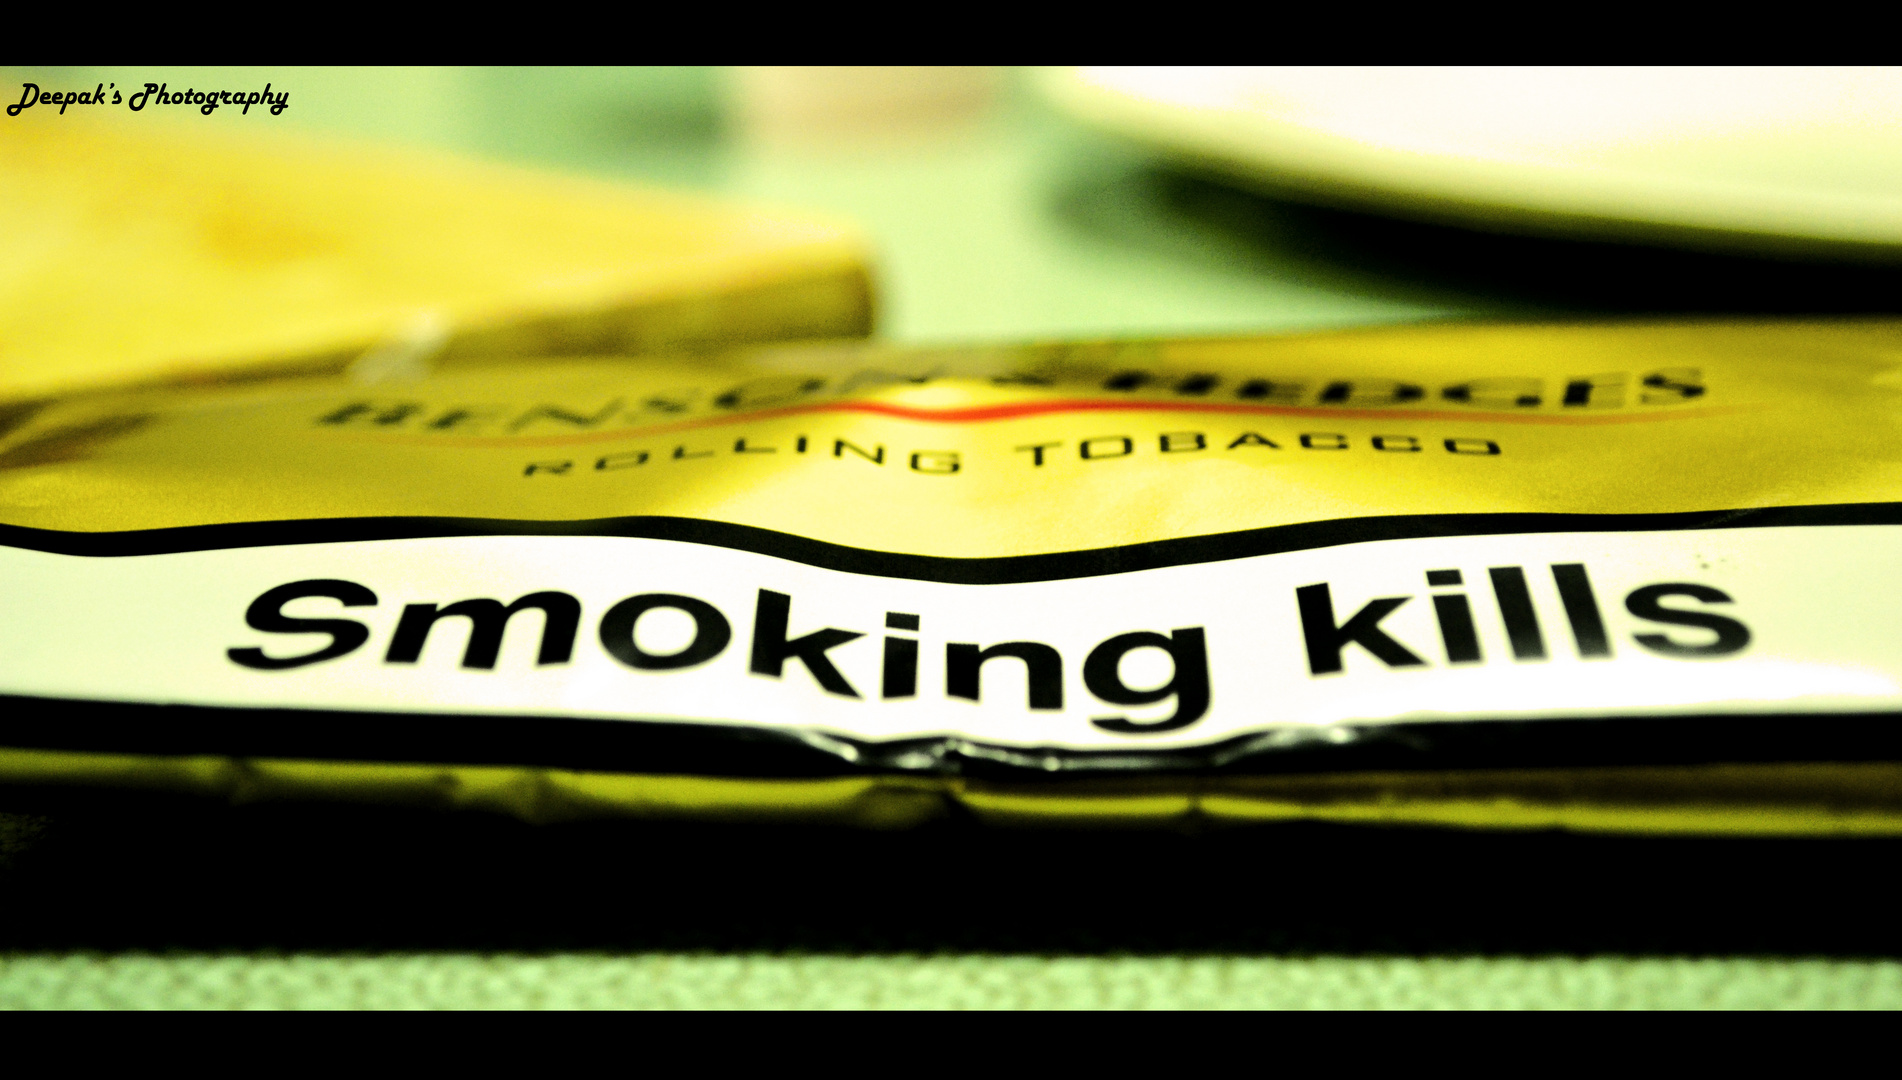 Smoking kills.... Really does...